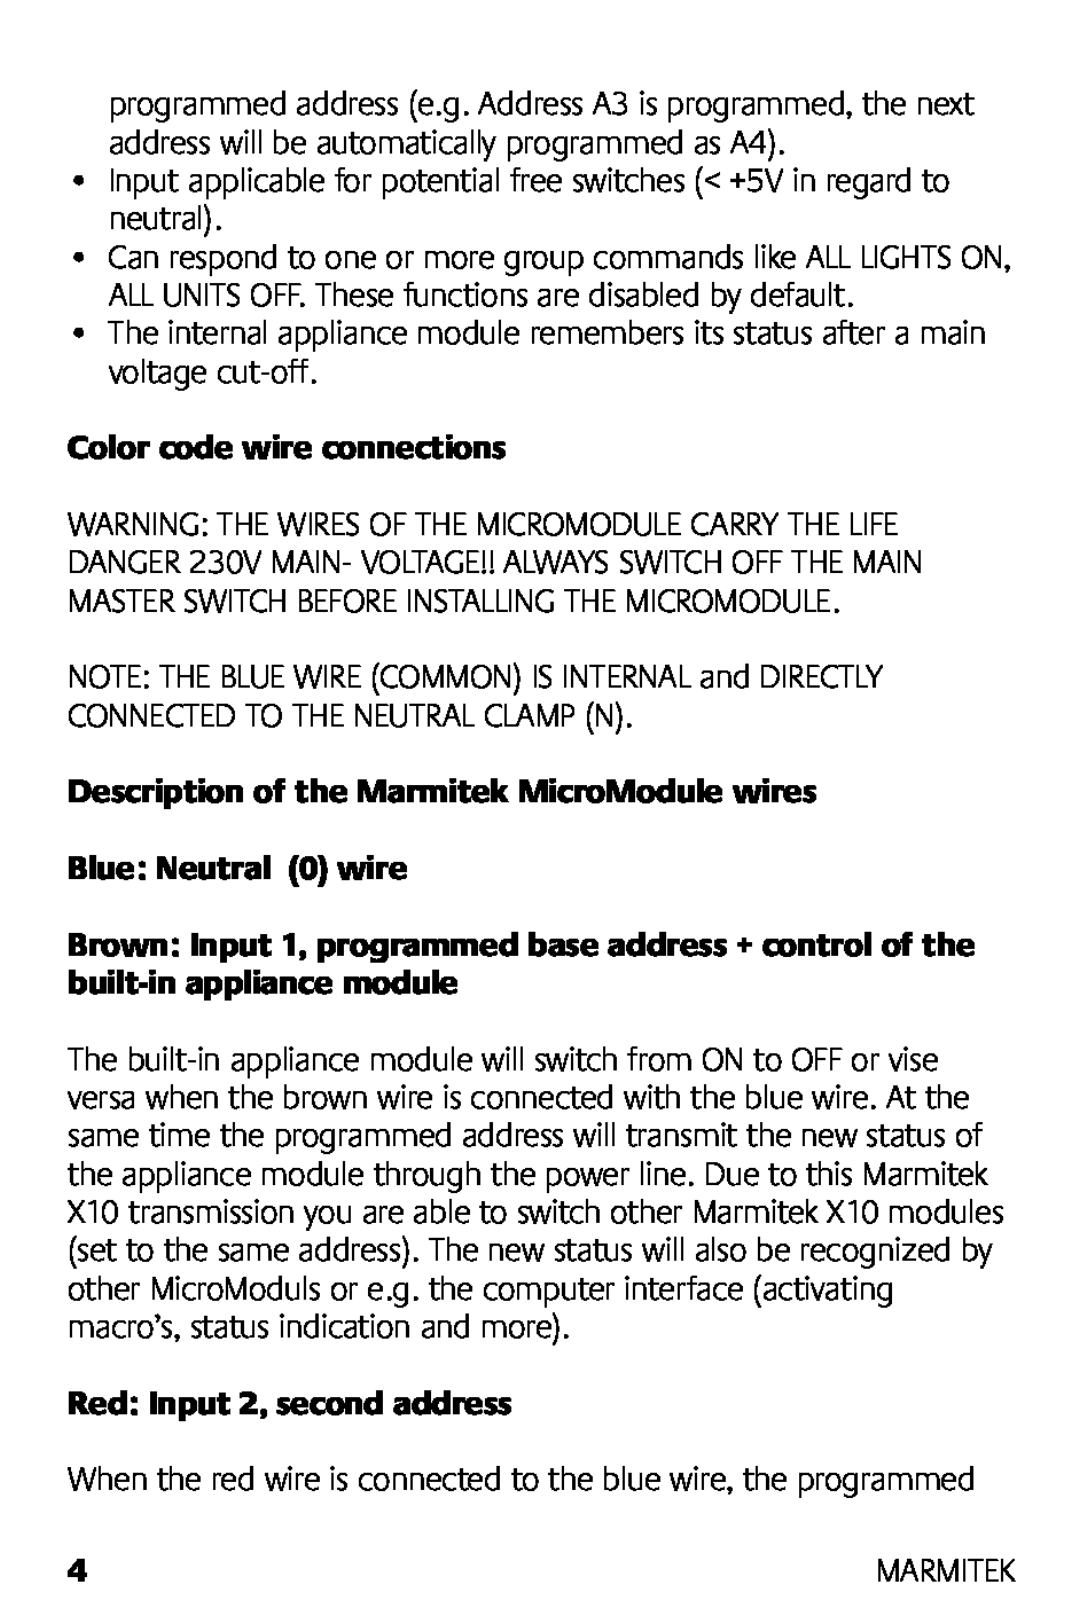 Marmitek AWM2 manual Color code wire connections, Description of the Marmitek MicroModule wires, Blue Neutral 0 wire 